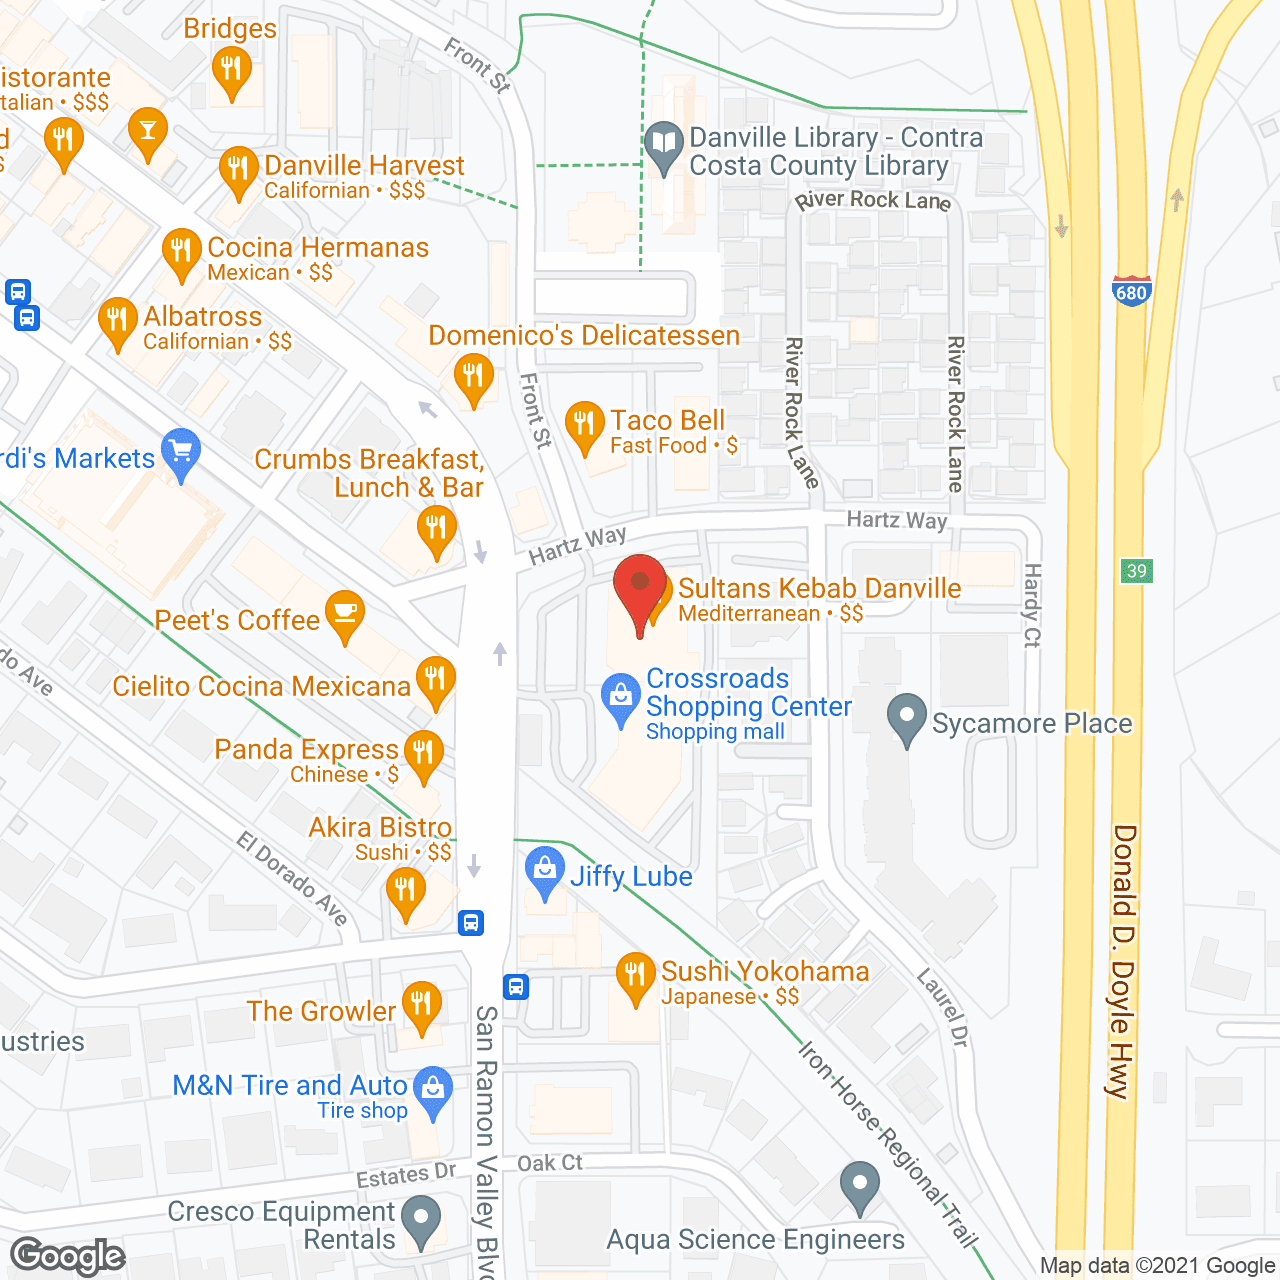 TheKey of Danville, CA in google map